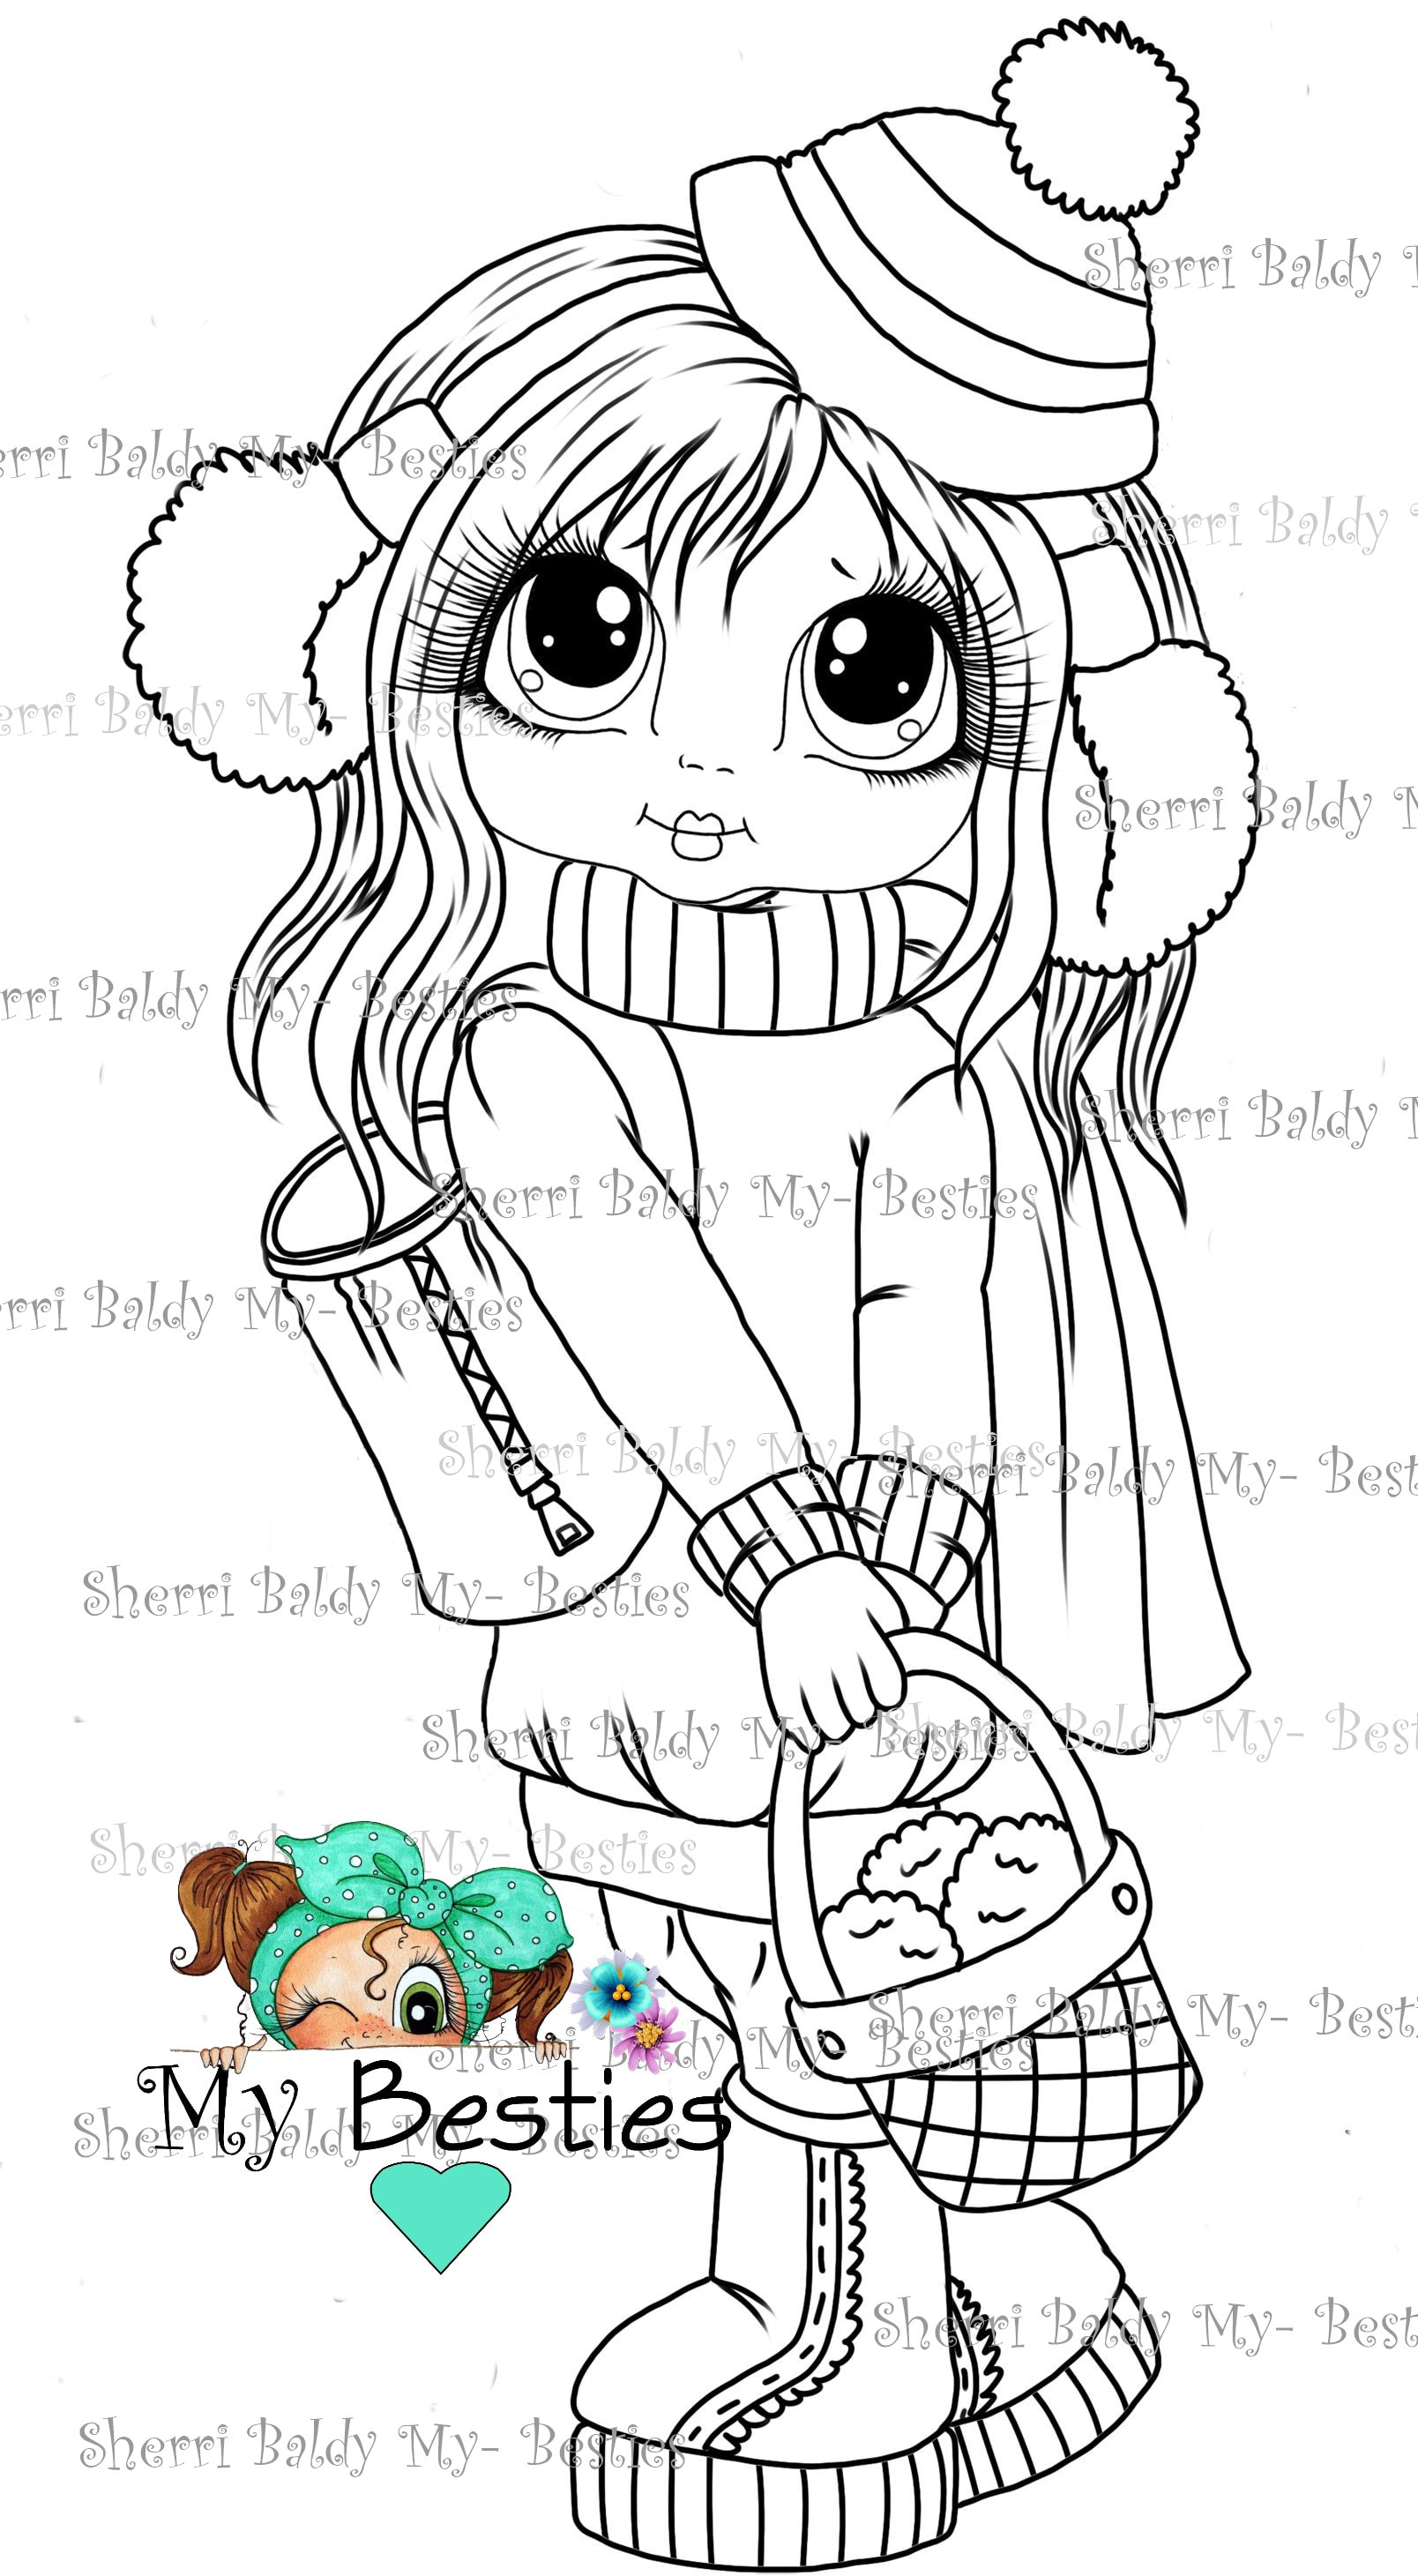 Instant Download Little Winter Darling Besties Doll 2A digi stamp